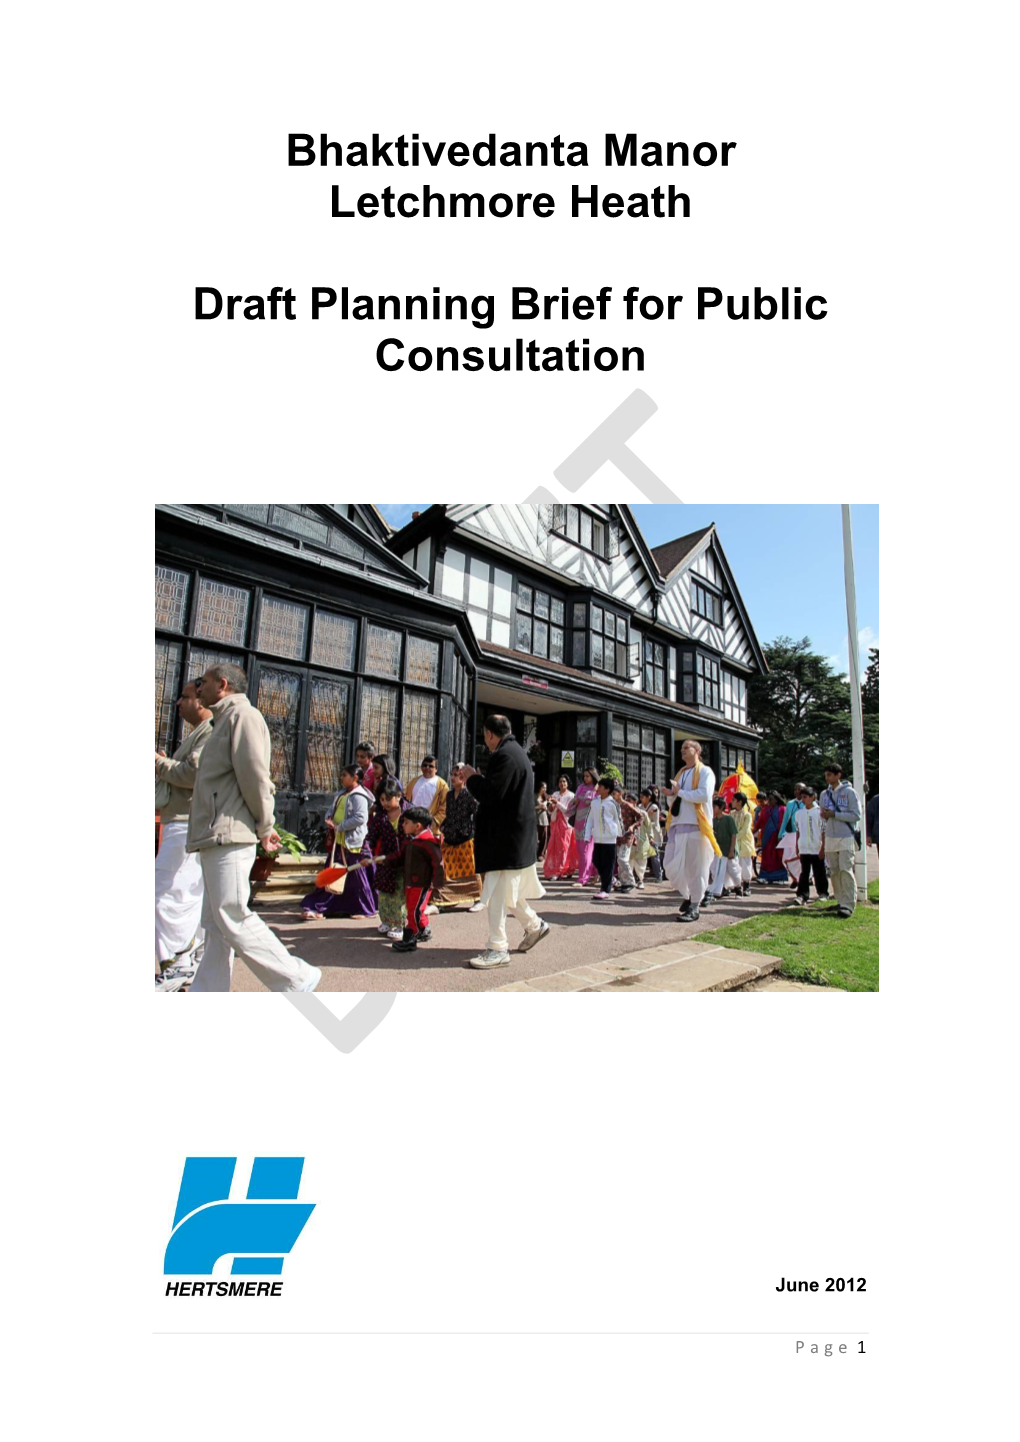 Bhaktivedanta Manor Letchmore Heath Draft Planning Brief For